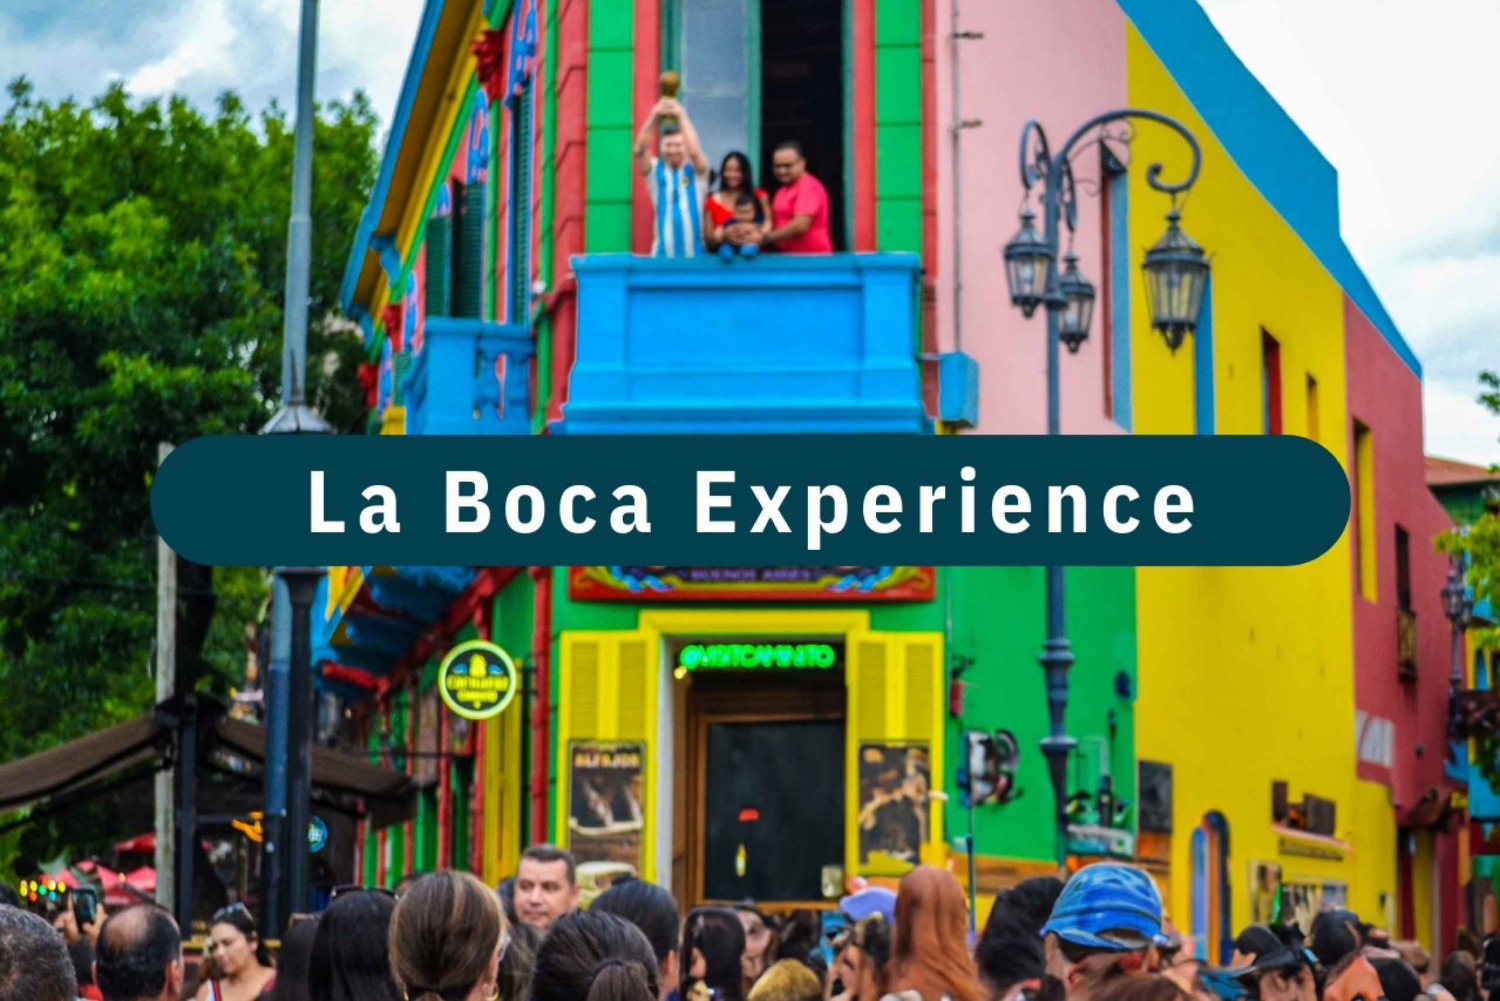 Buenos aires: La Boca Art and History